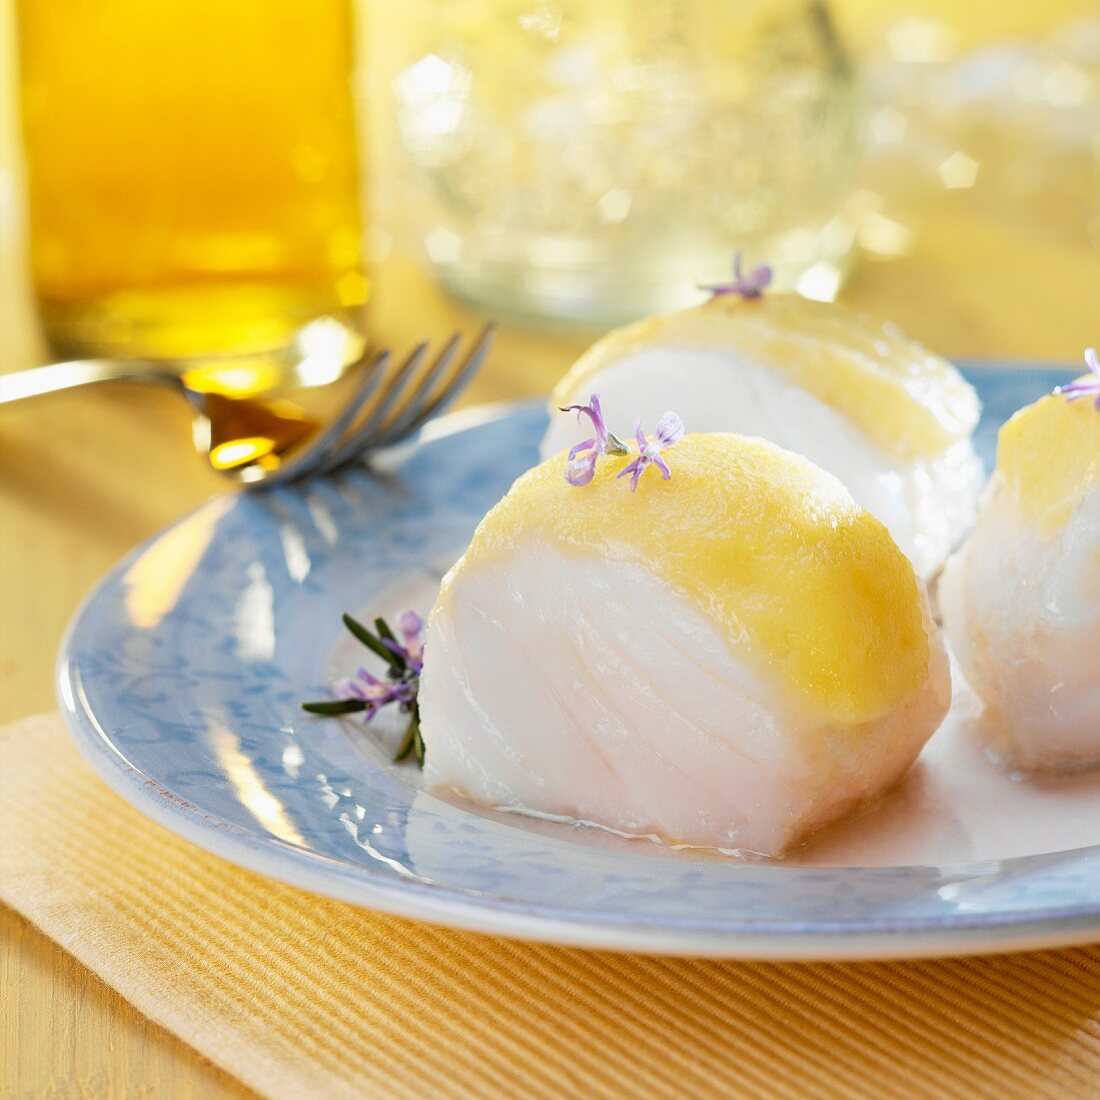 Cod with garlic mayonnaise